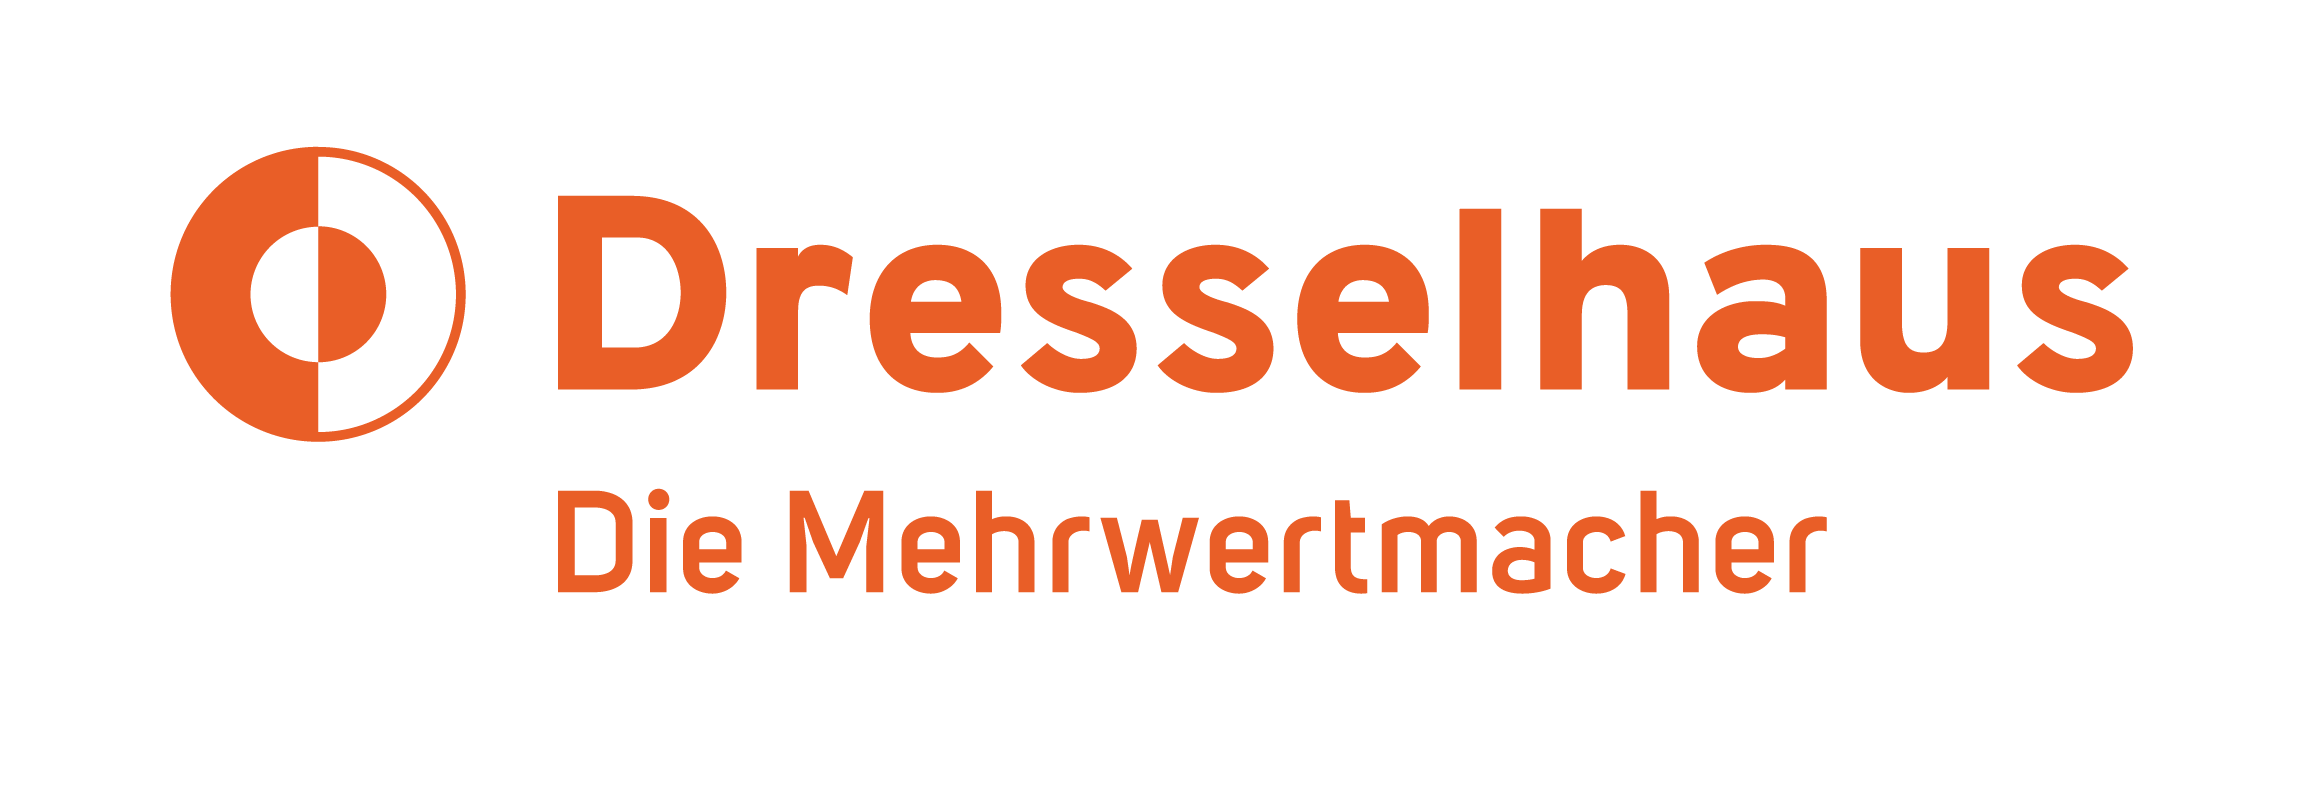 https://upload.wikimedia.org/wikipedia/commons/1/18/Dresselhaus_Logo_Claim.png